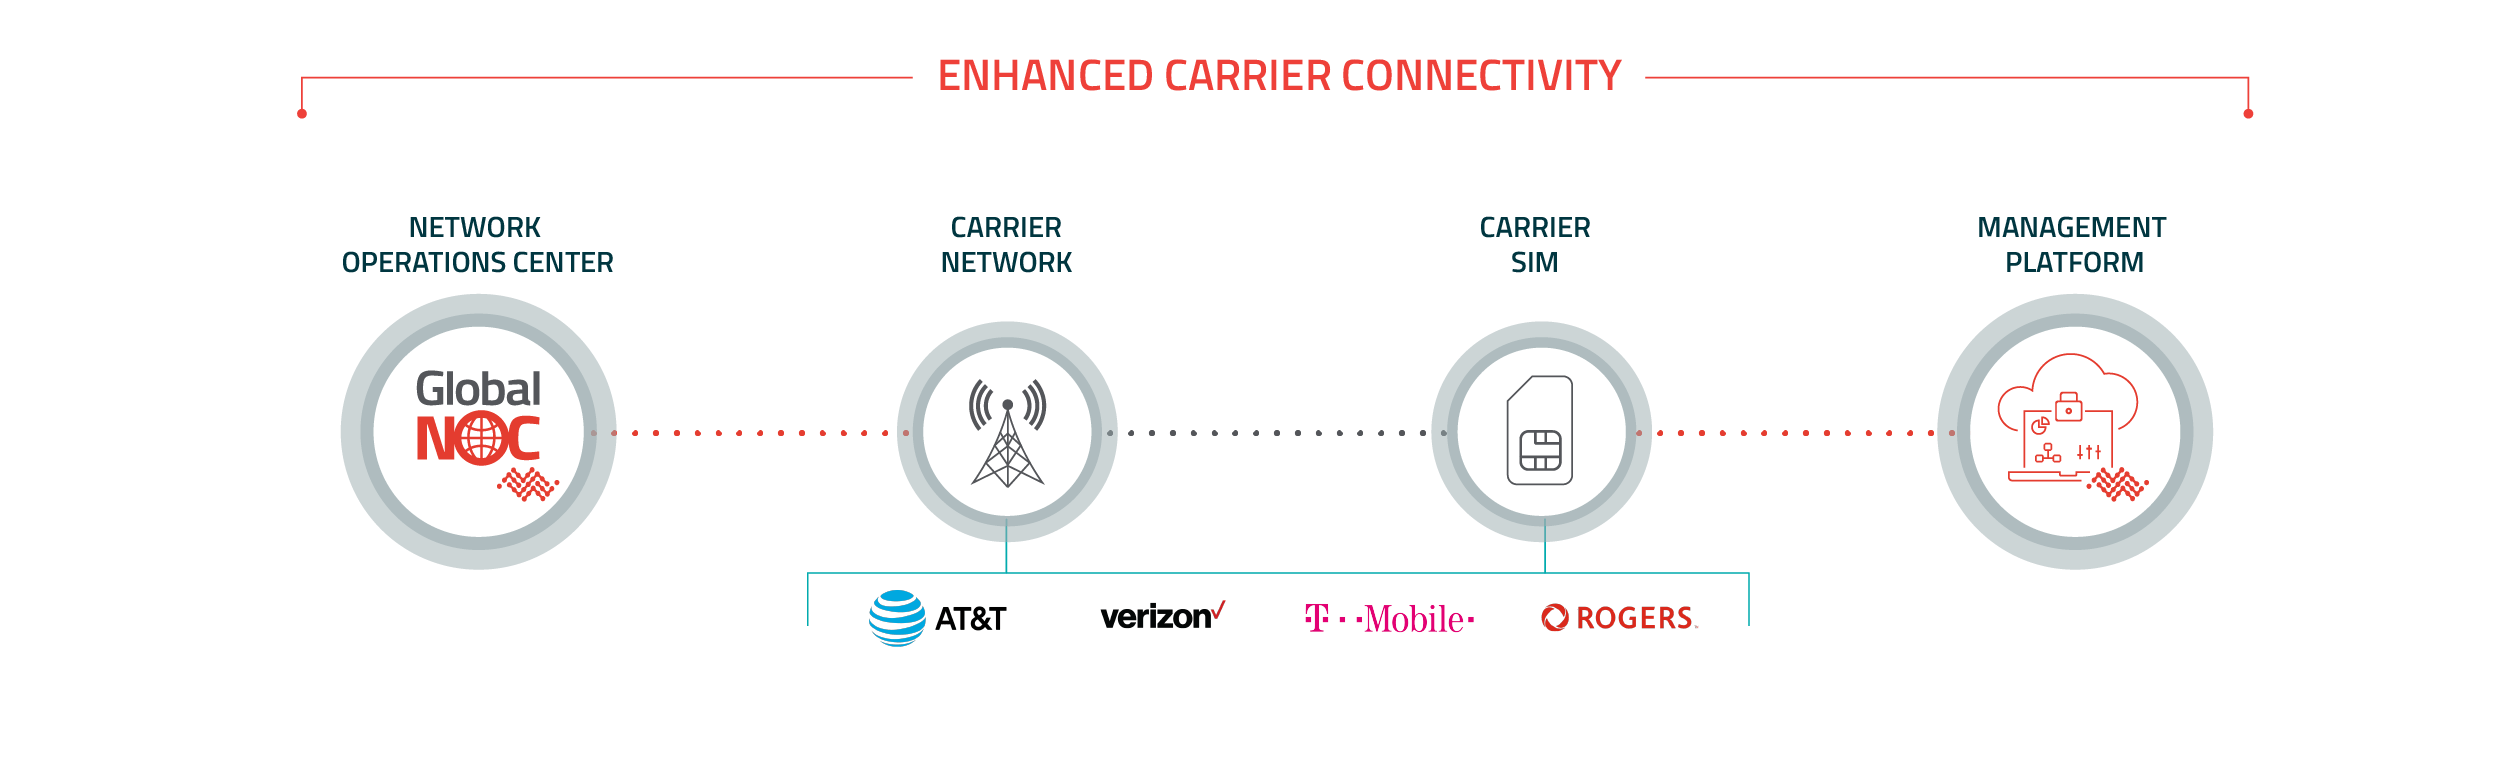 Enhanced Carrier Connectivity